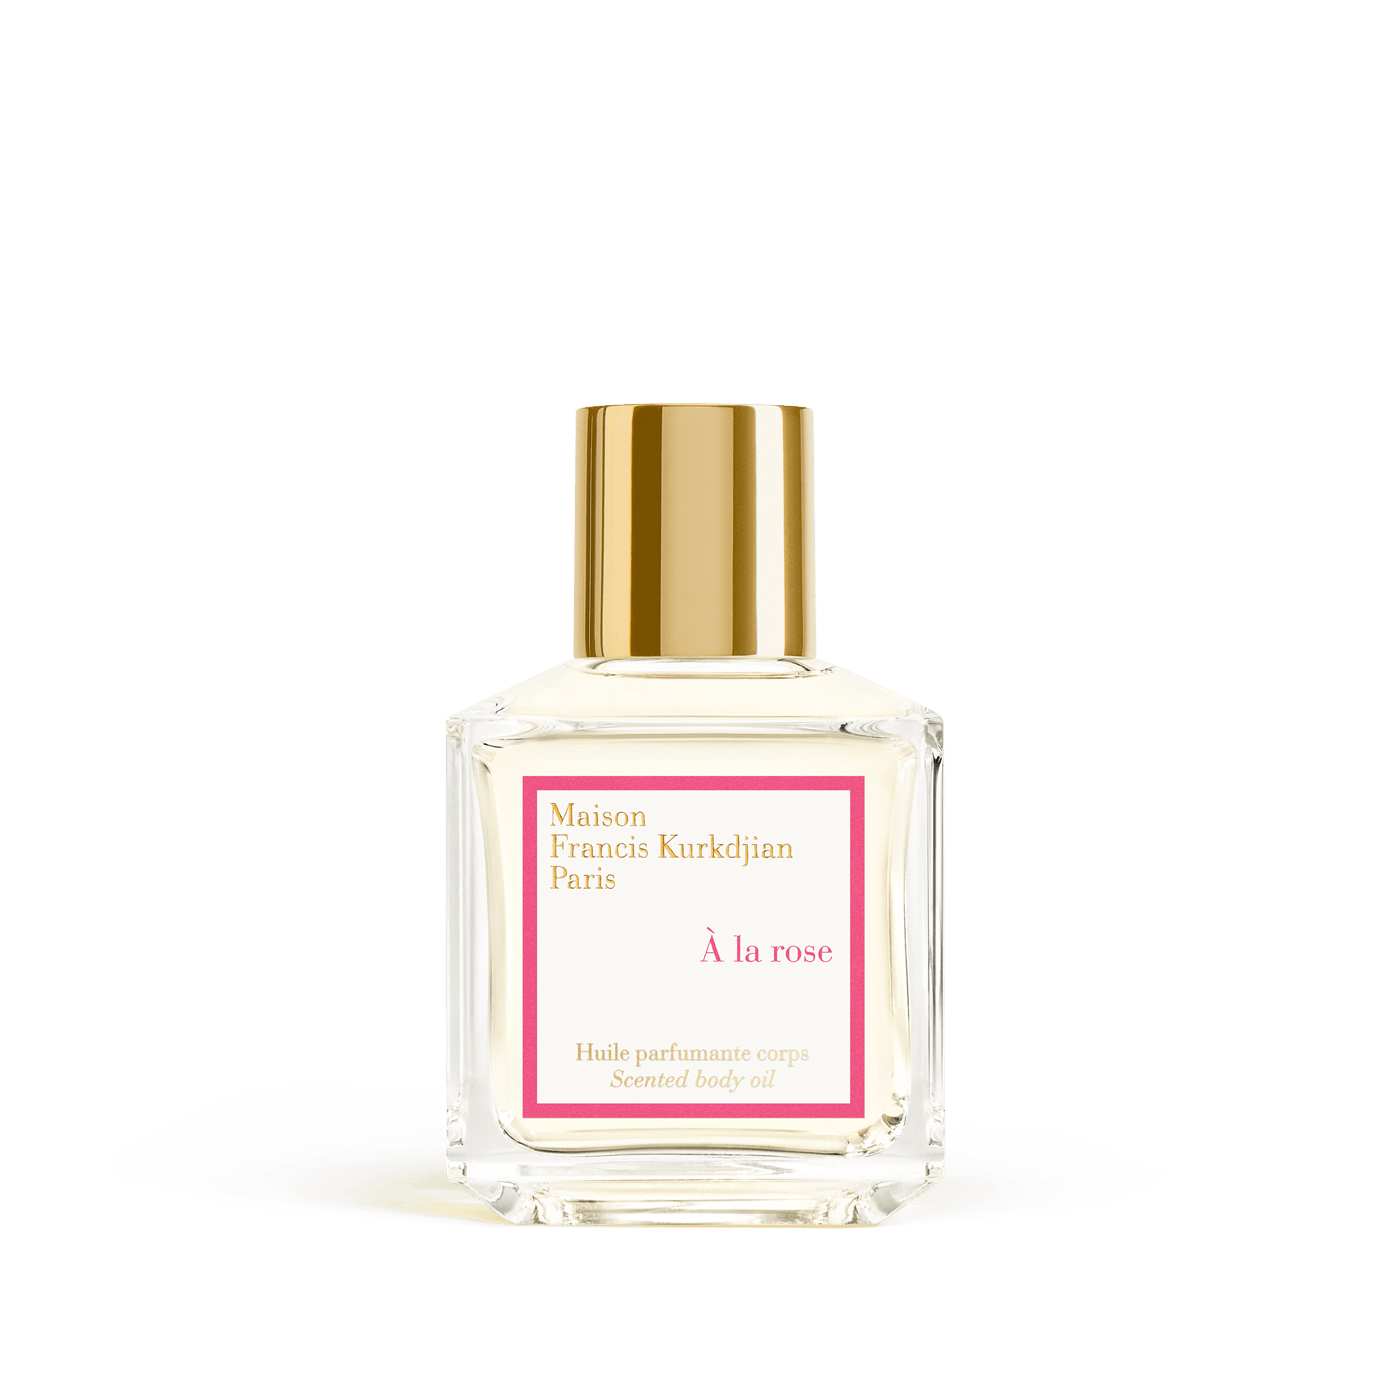 Maison Francis Kurkdjian - A la rose body oil | Perfume Lounge